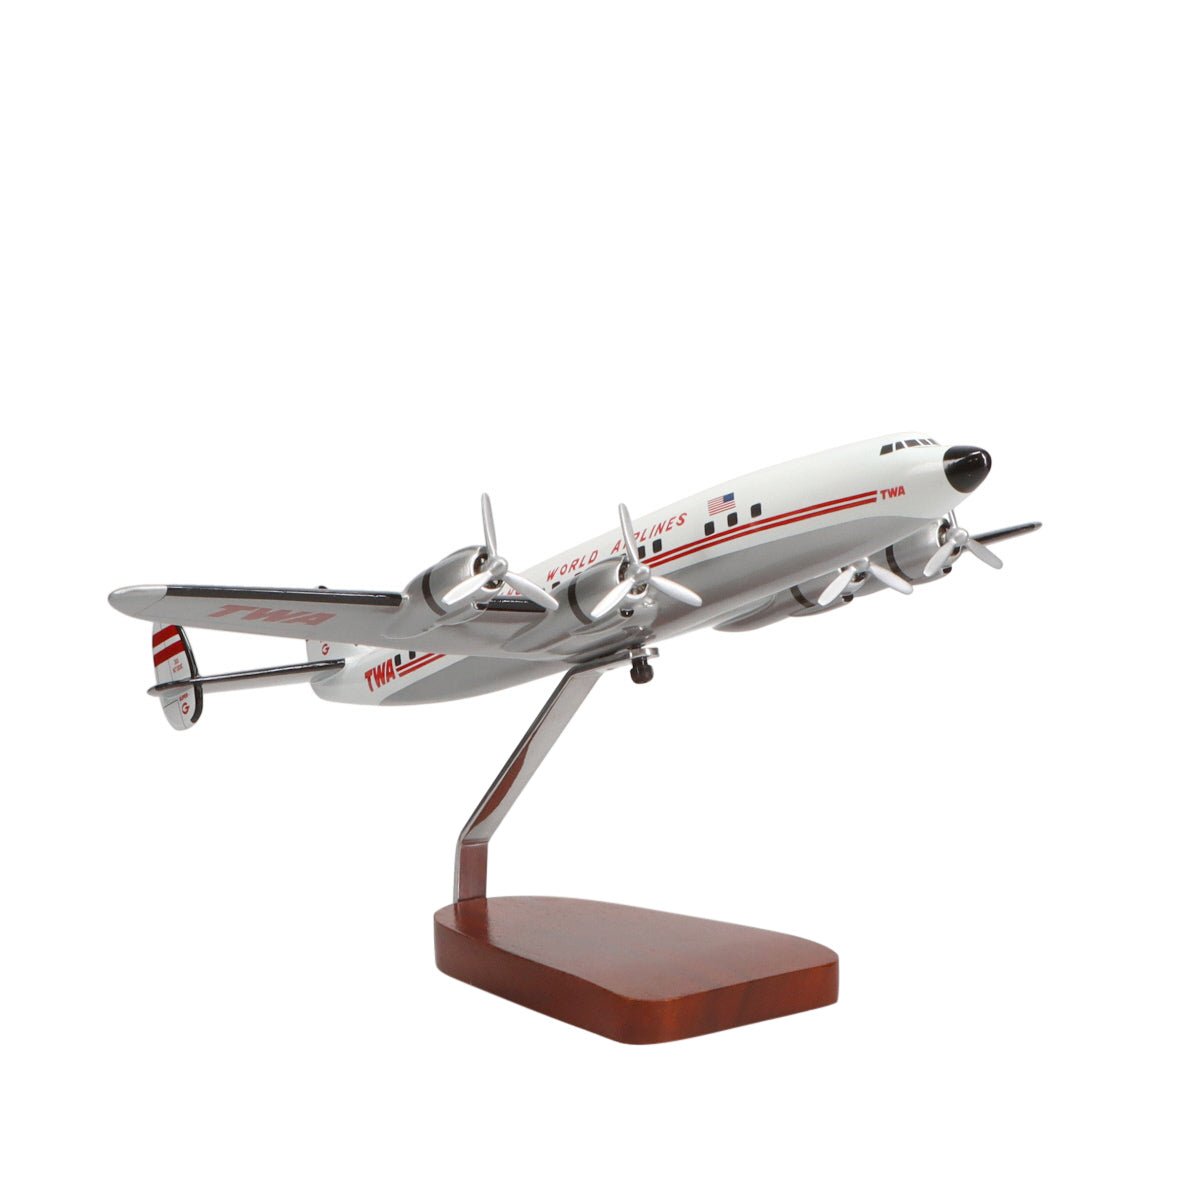 Lockheed L-1049 Super Constellation® TWA (Trans World Airlines) Limited Edition Large Mahogany Model - PilotMall.com